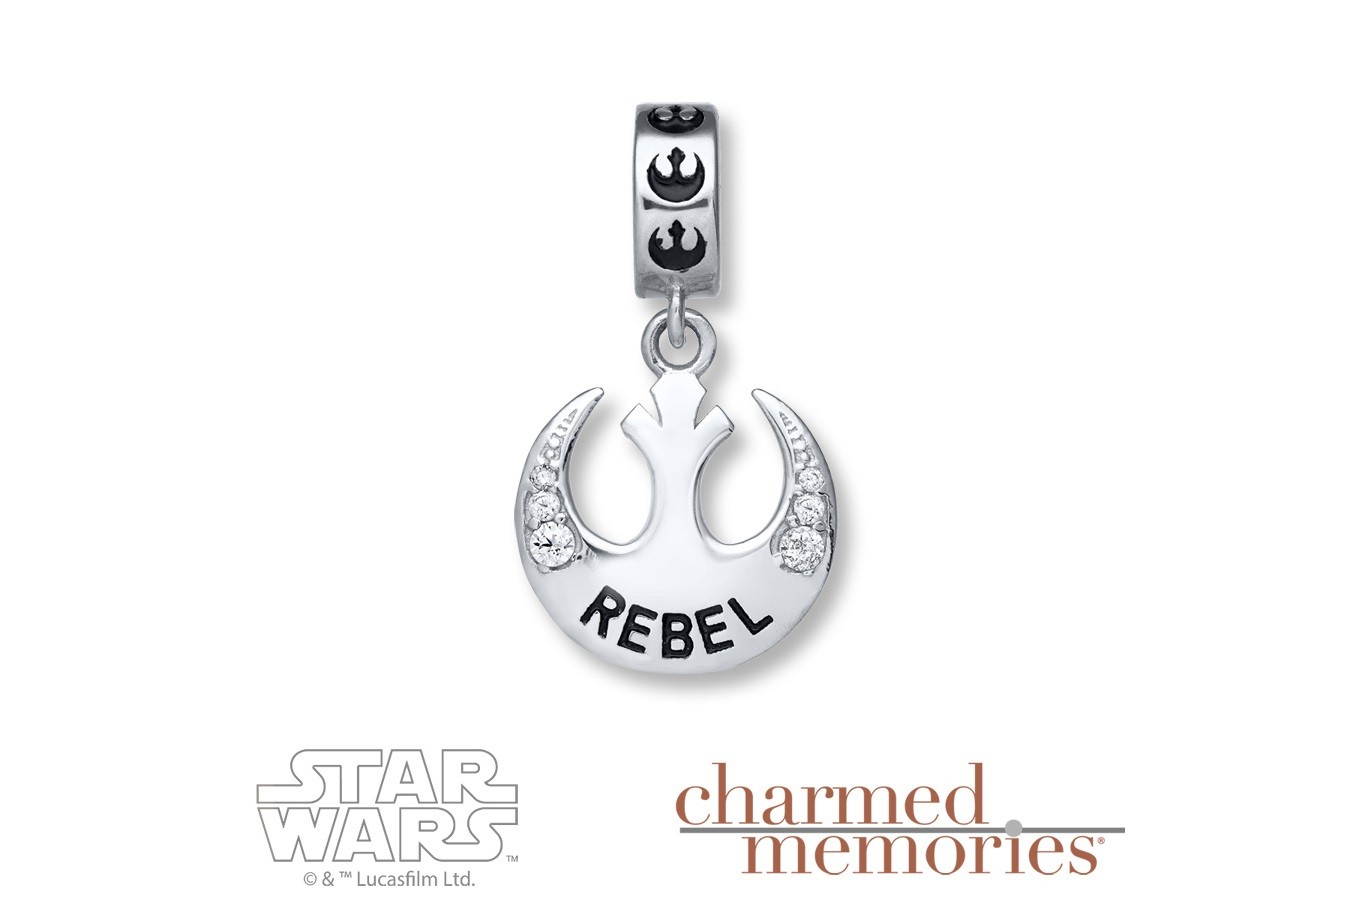 Kay Jewelers x Star Wars Rebel Alliance dangle charm